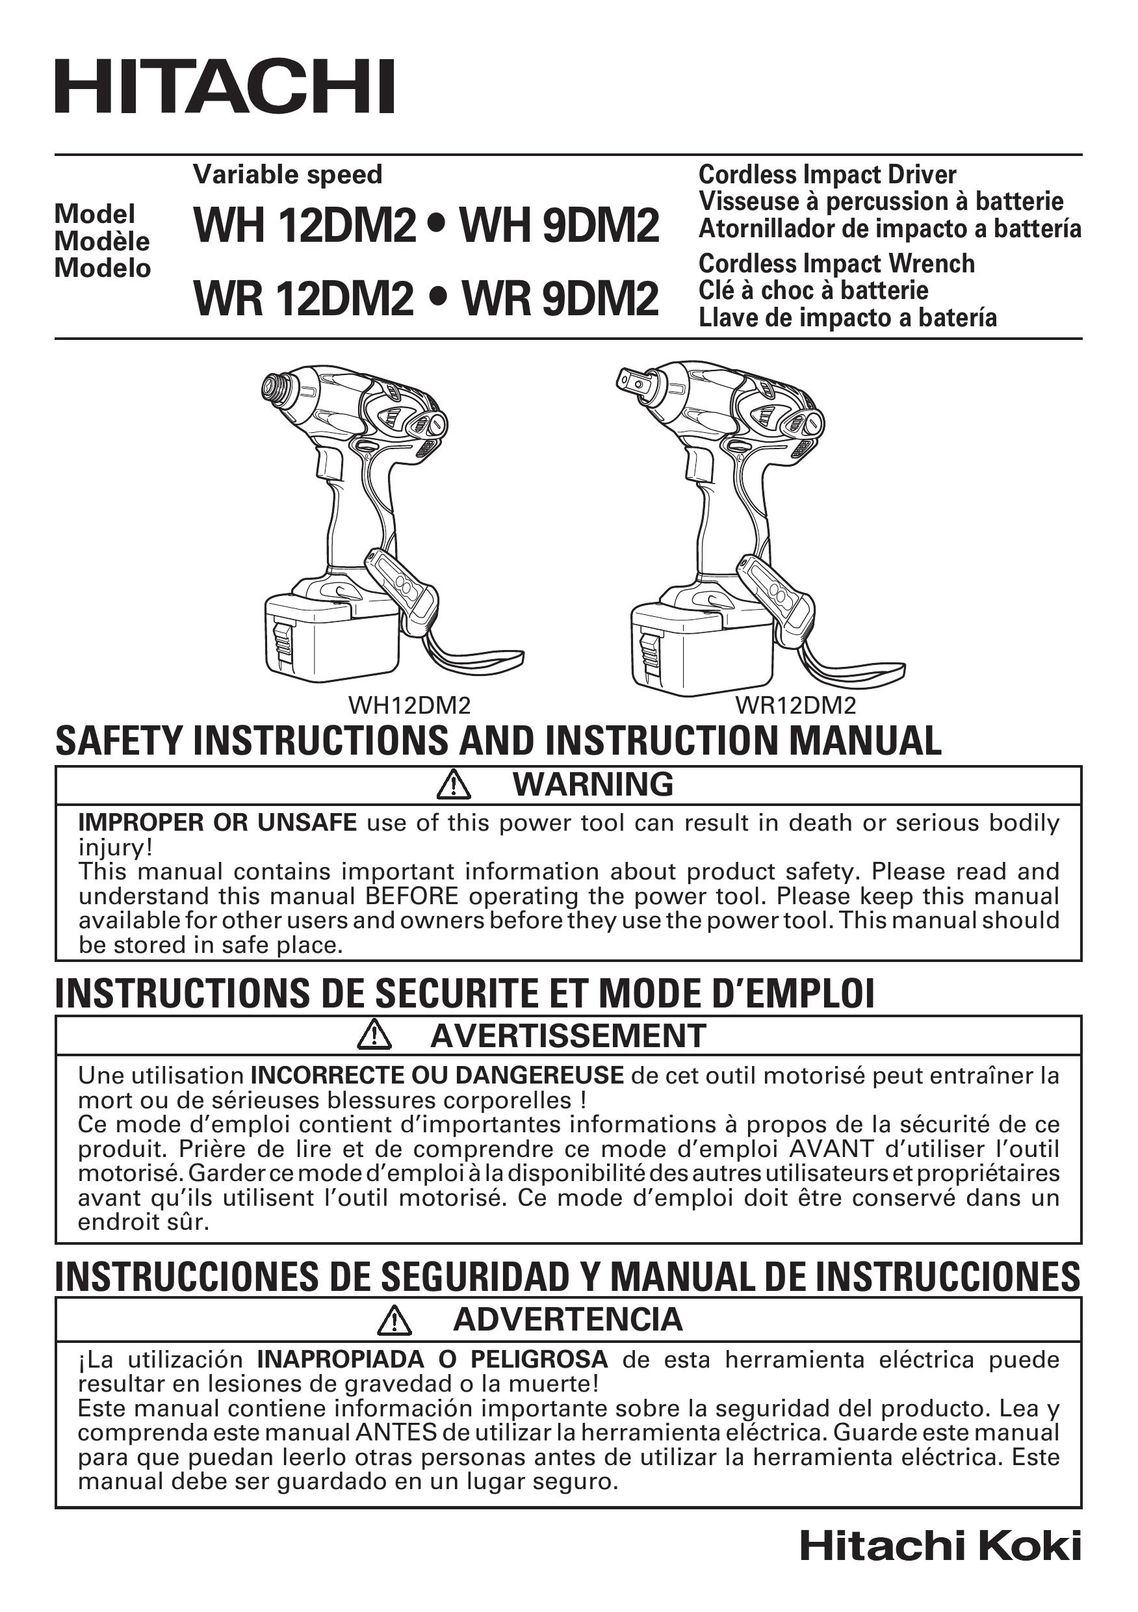 Hitachi WH9DM2 Impact Driver User Manual